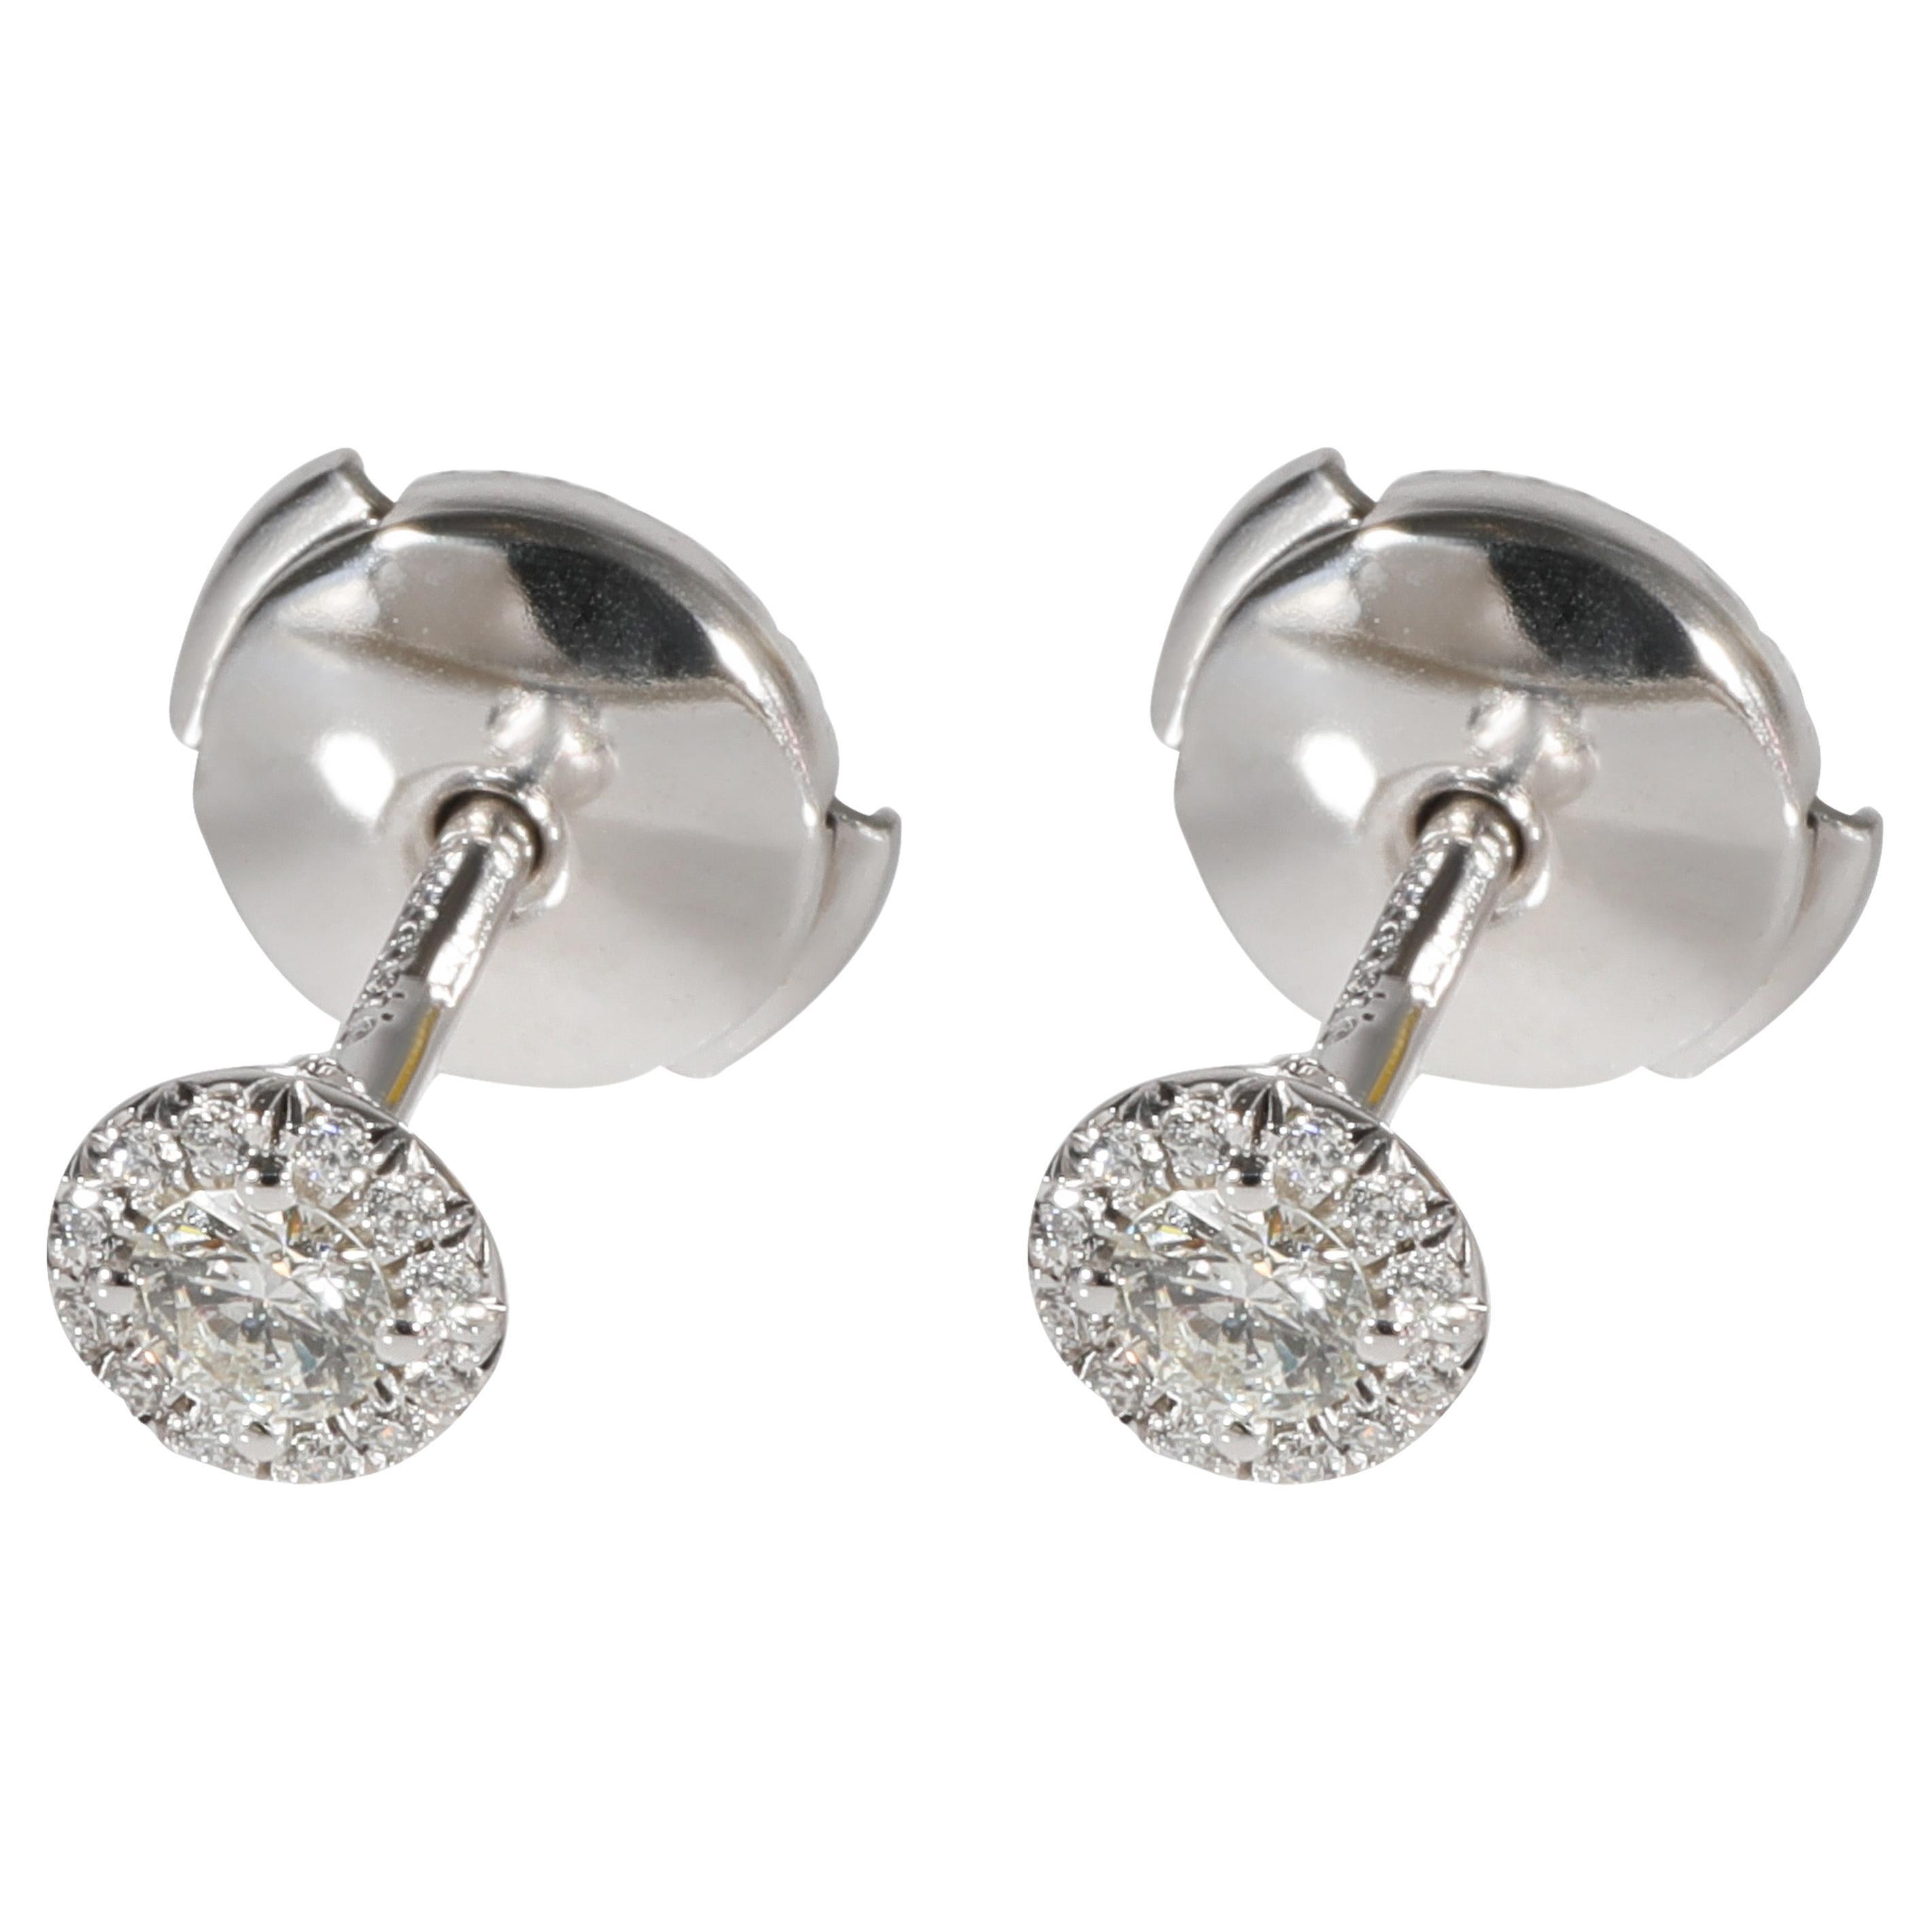 Tiffany & Co. Soleste Diamond Earrings in 950 Platinum 0.17 CTW